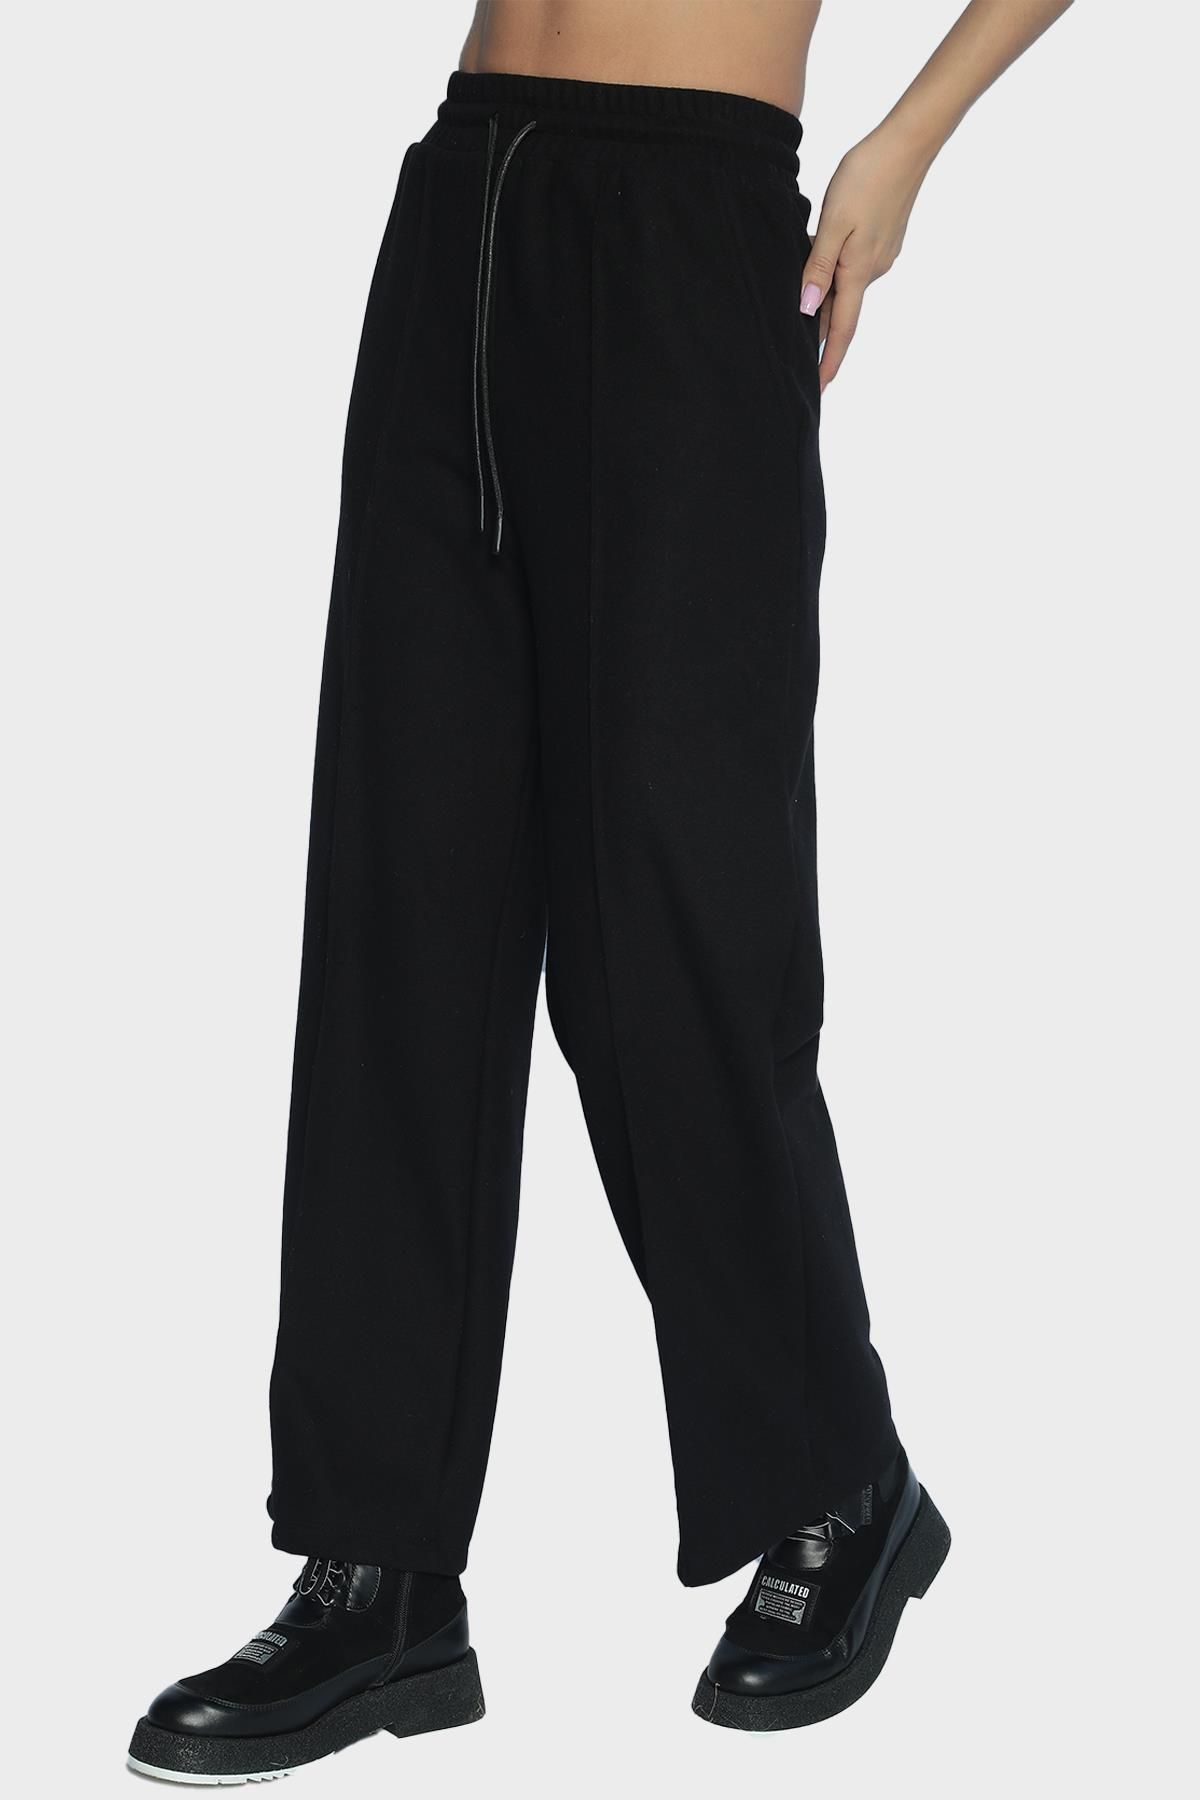 Kadın yüksek bel geniş paça pamuklu pantolon - Siyah